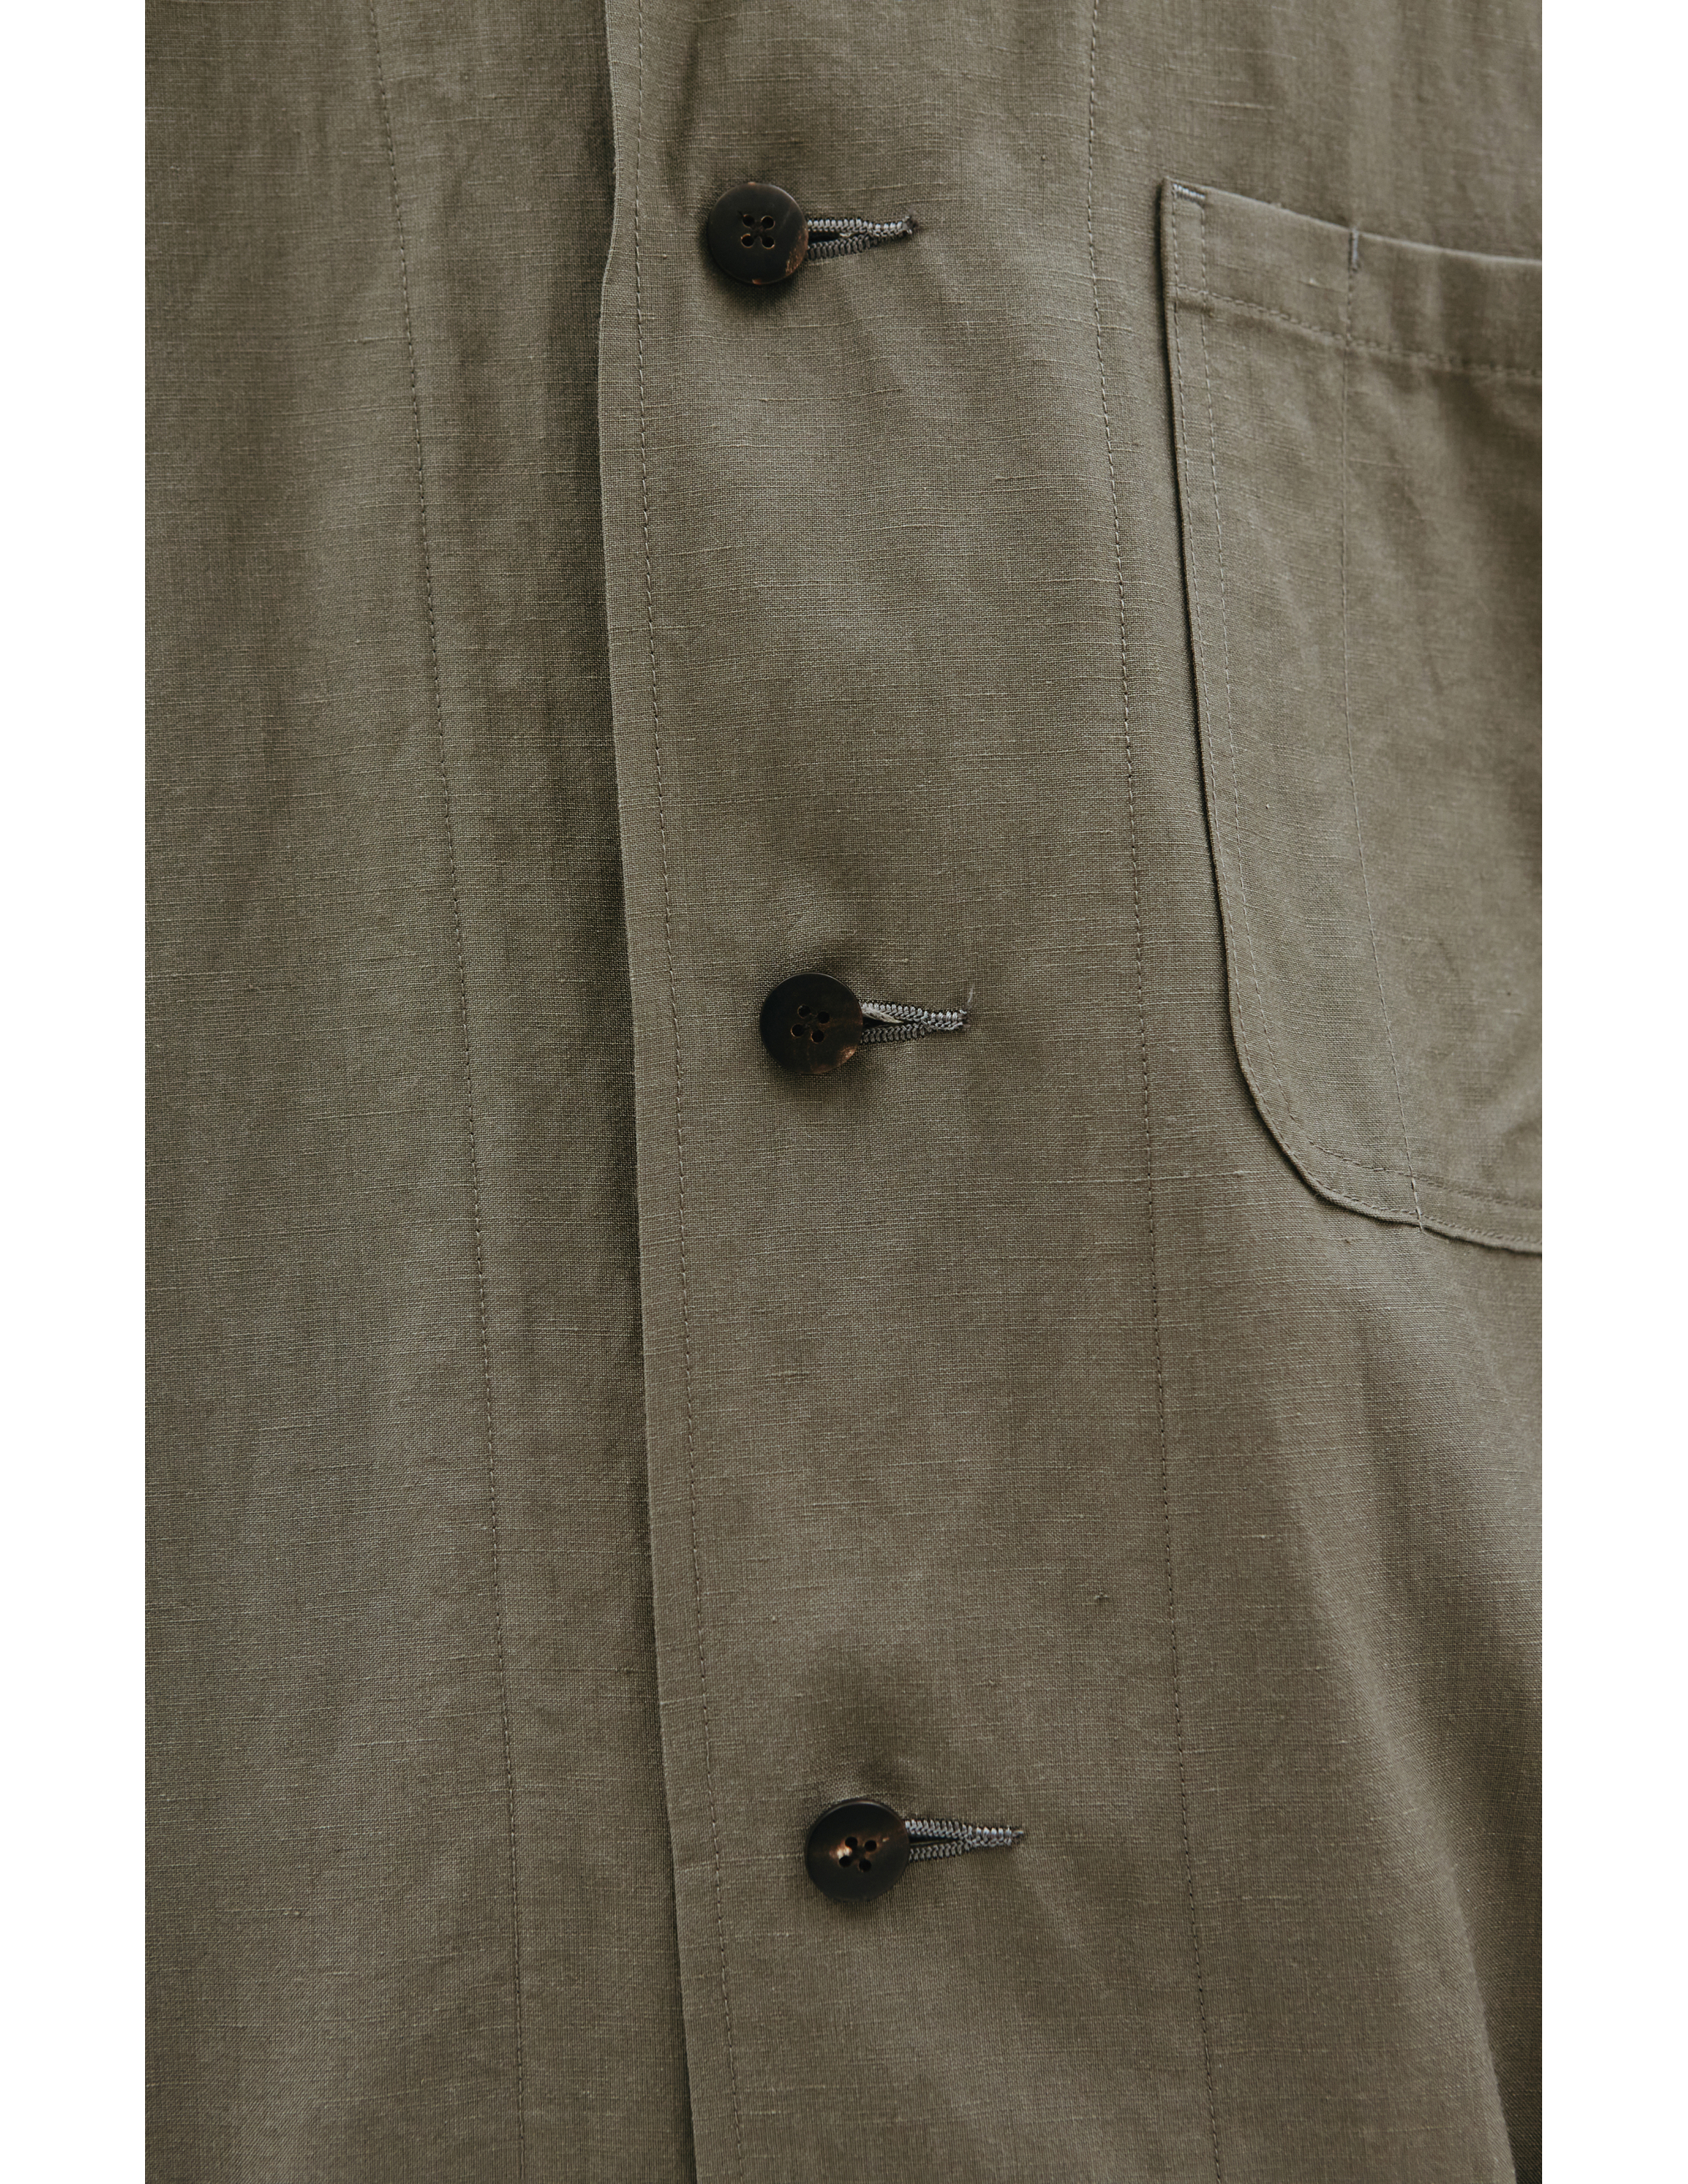 Пальто Laboratory с накладными карманами visvim 0122105013010/olv, размер 5 0122105013010/olv - фото 6